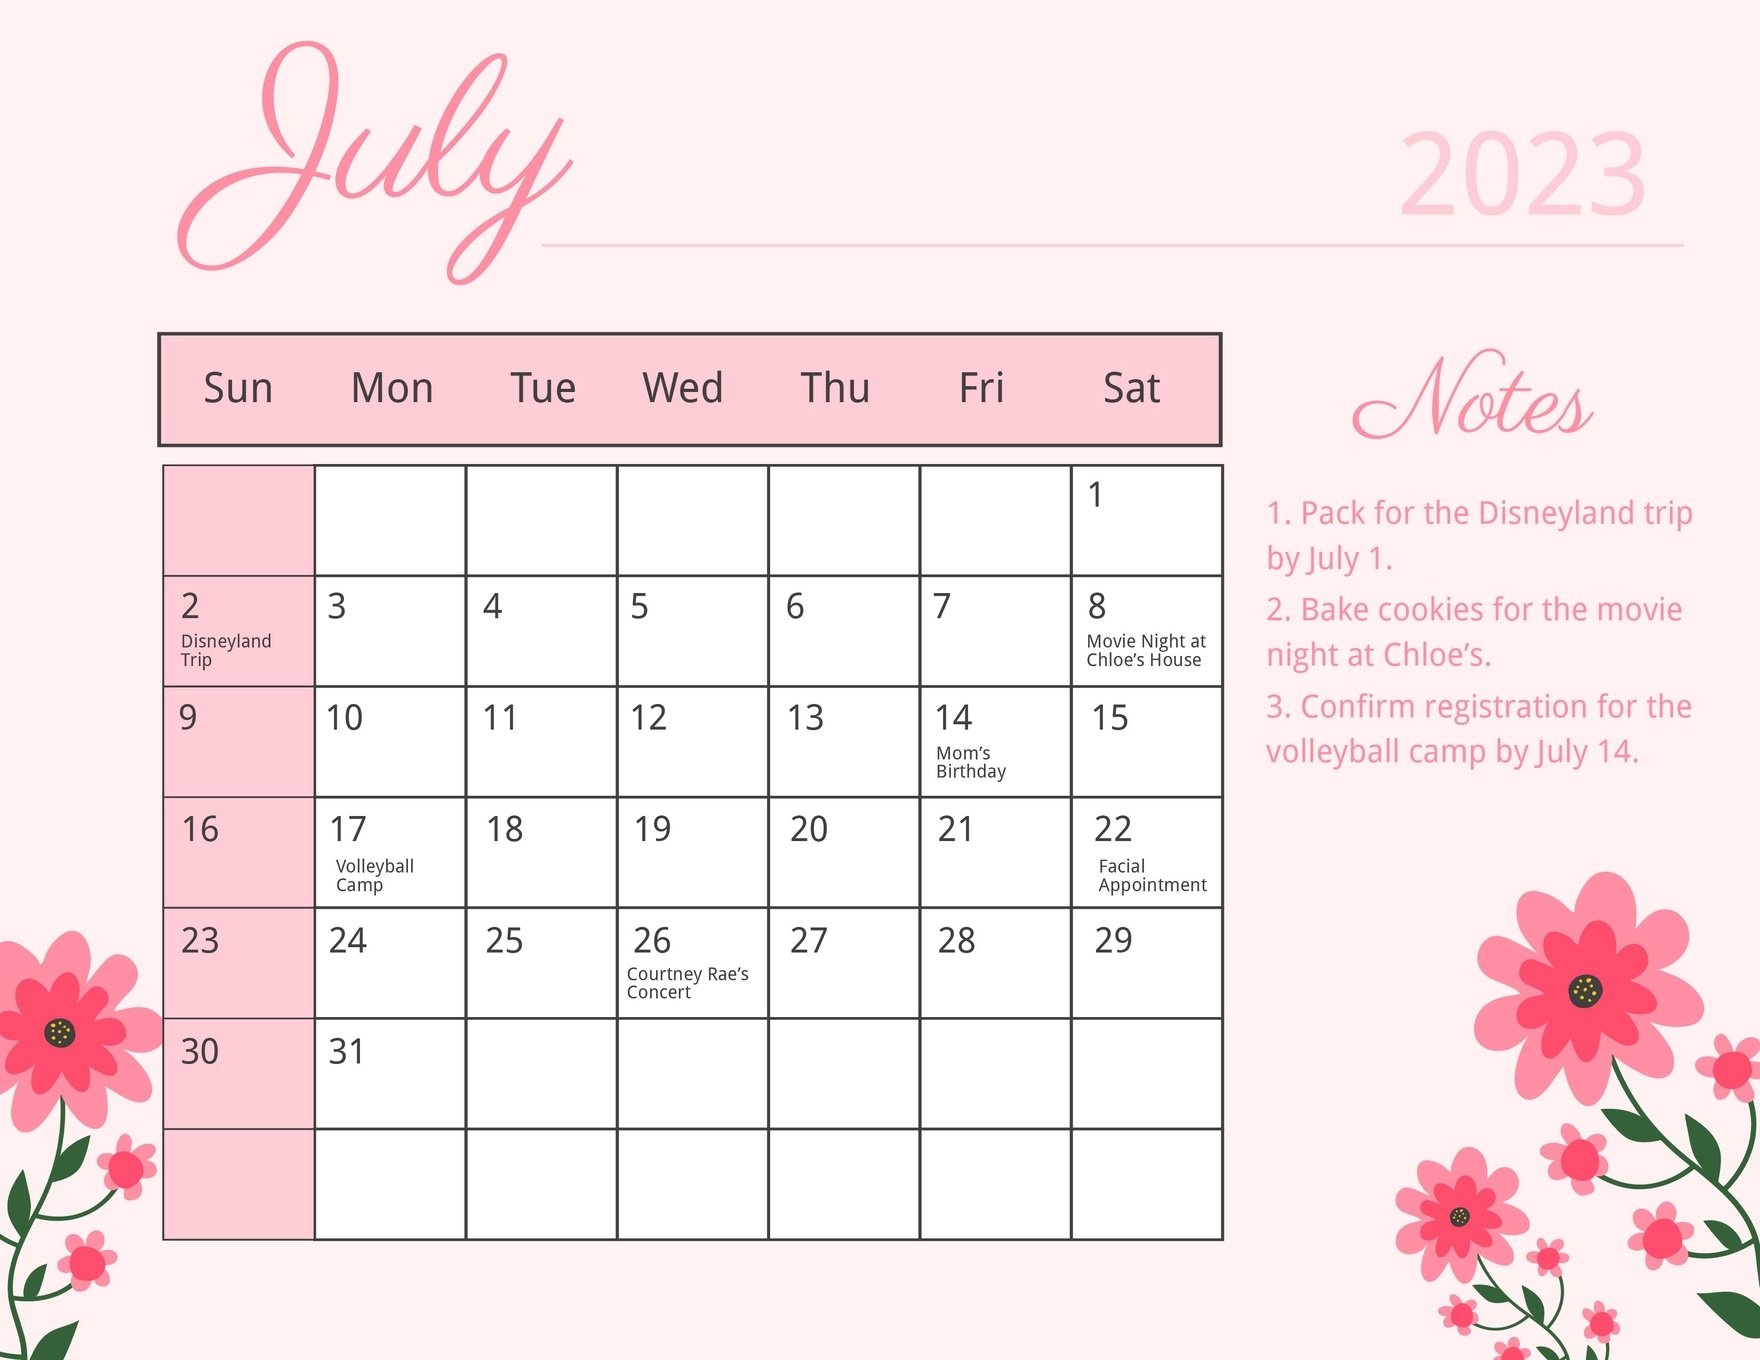 Blue July 2023 Calendar Template - Download in Word, Google Docs, Excel ...